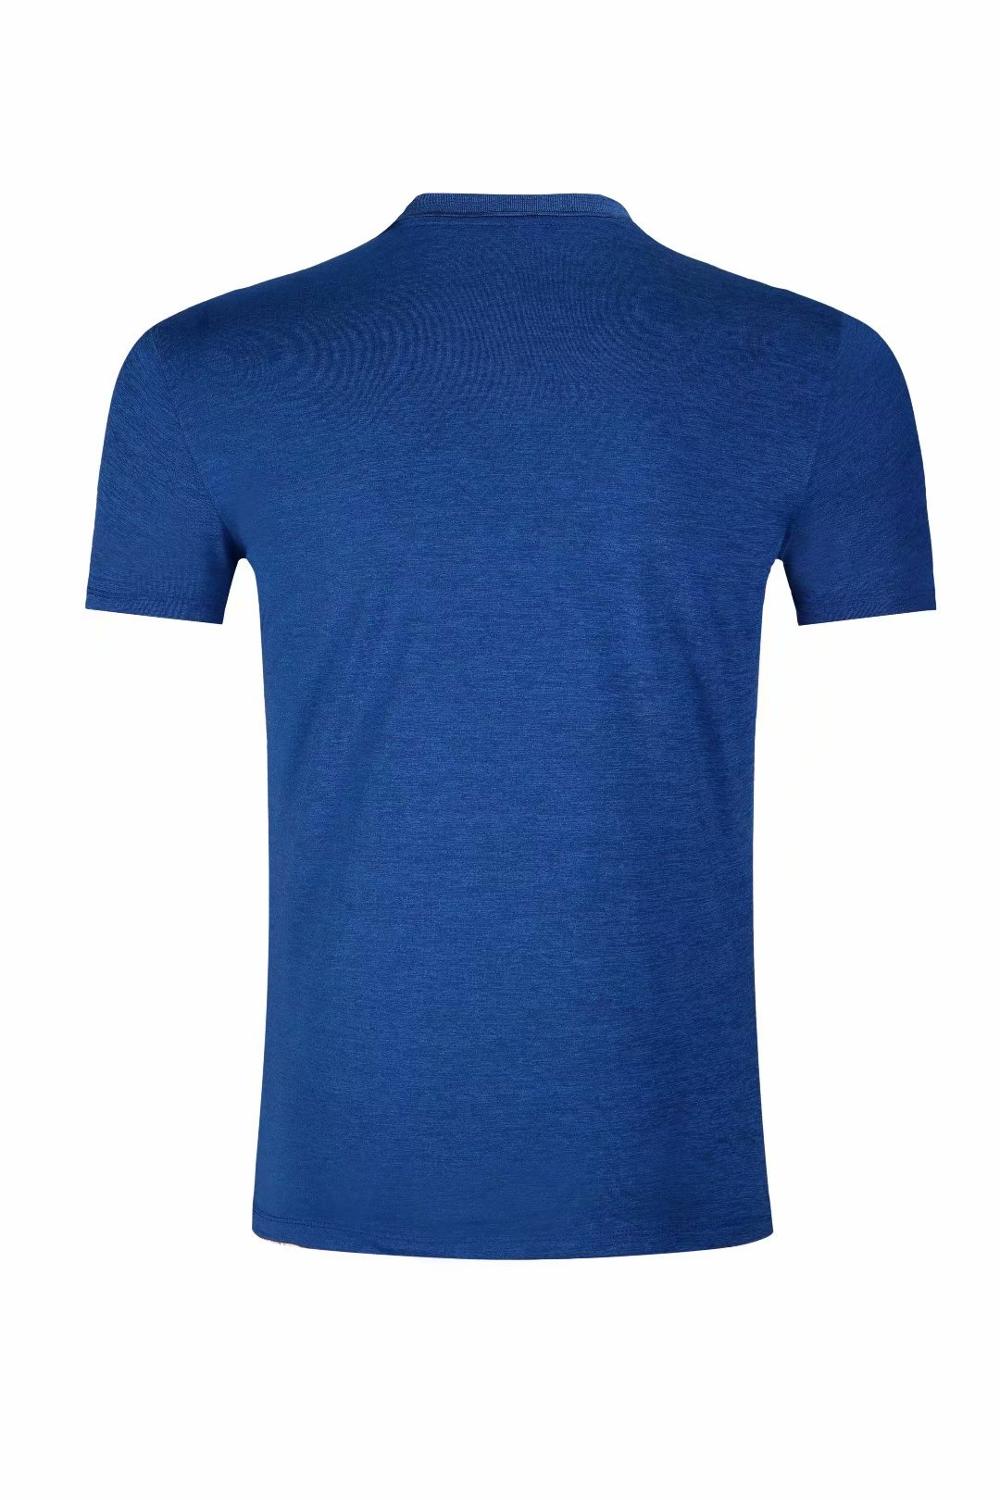 1808 himmelblå trænings t-shirt